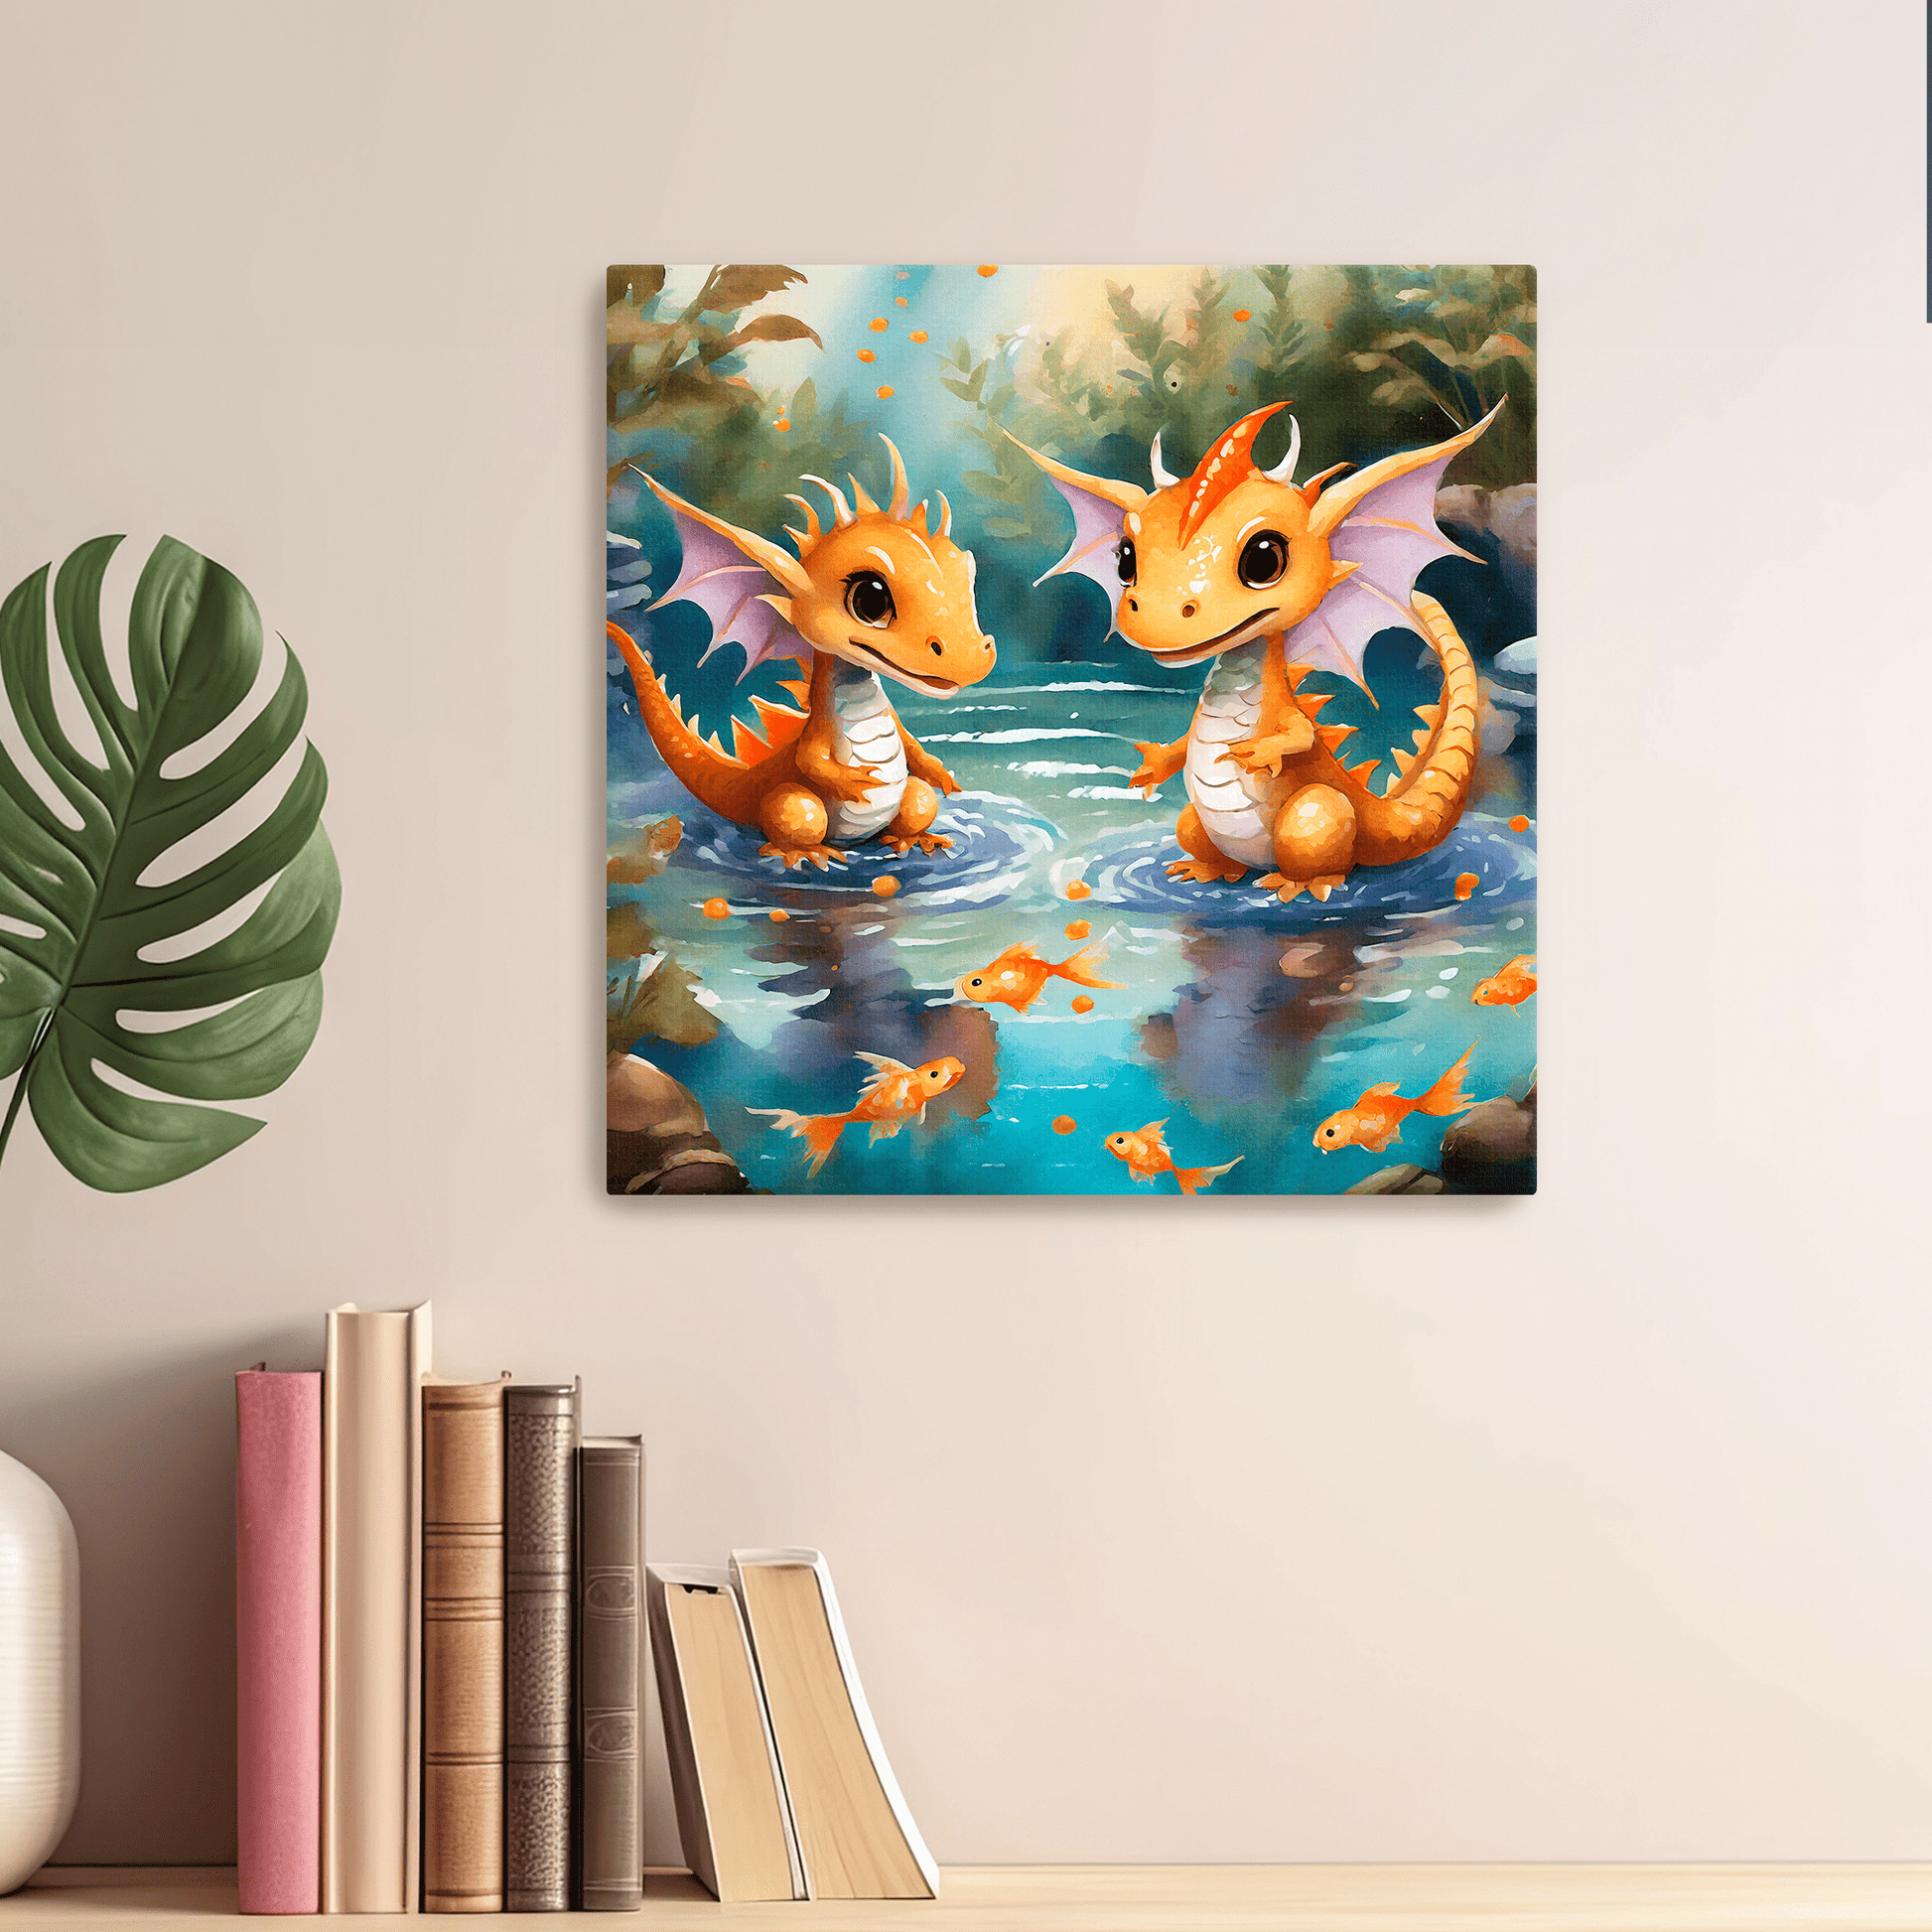 Baby Dragons Play with Goldfish - Metal Poster - Premium Metal Poster